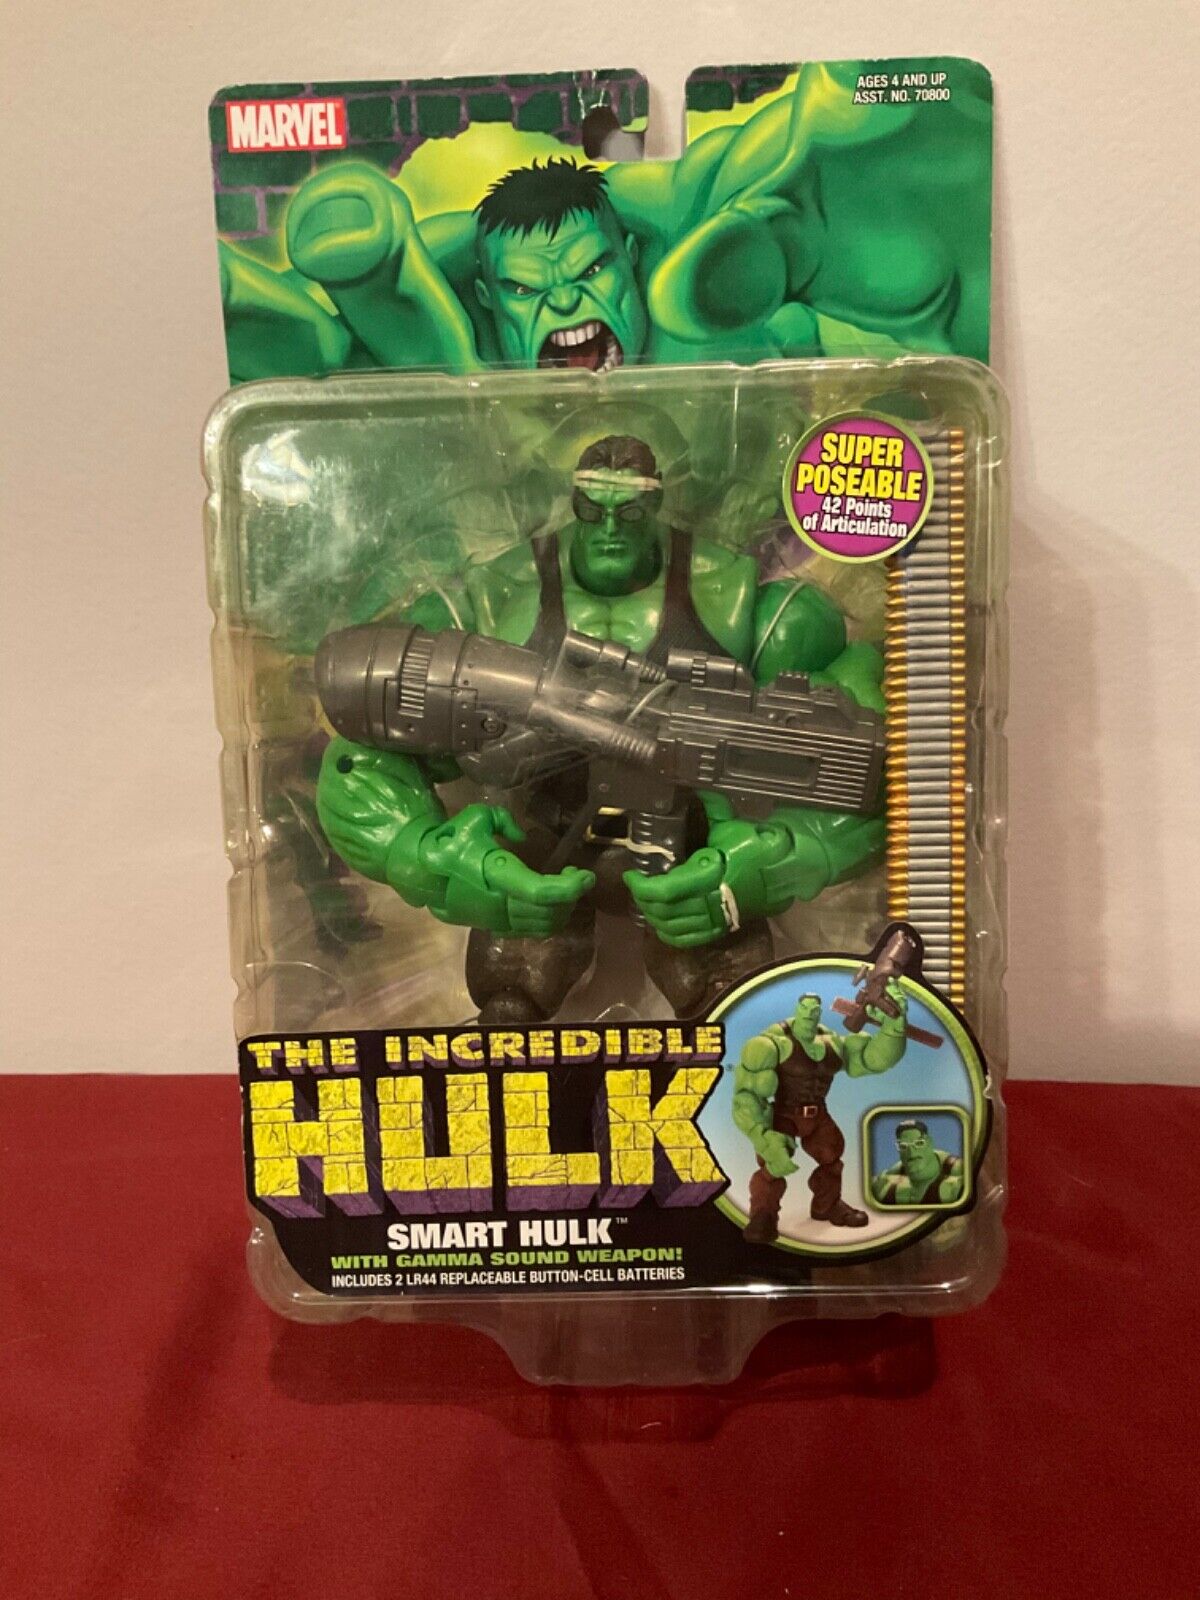 Marvel Toybiz 2004 The Incredible Hulk Smart Hulk with Gamma Sound Weapon